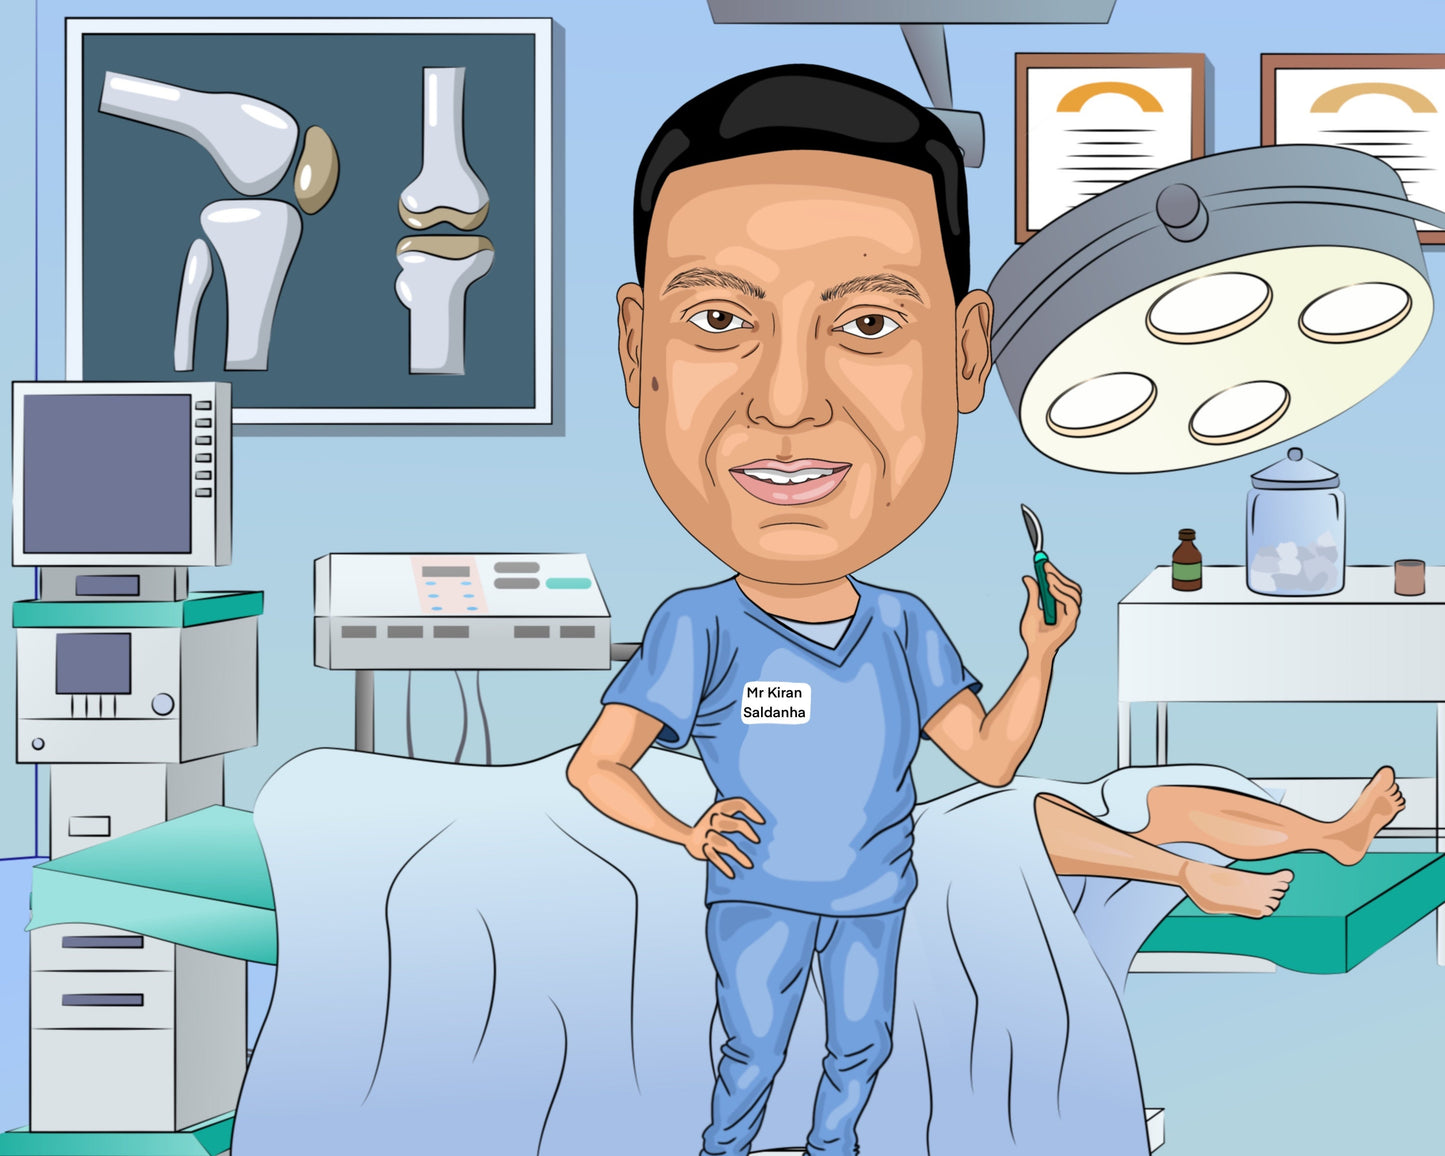 Orthopedic Surgeon Gift - Custom Caricature Portrait From Your Photo/Orthopedic doctor